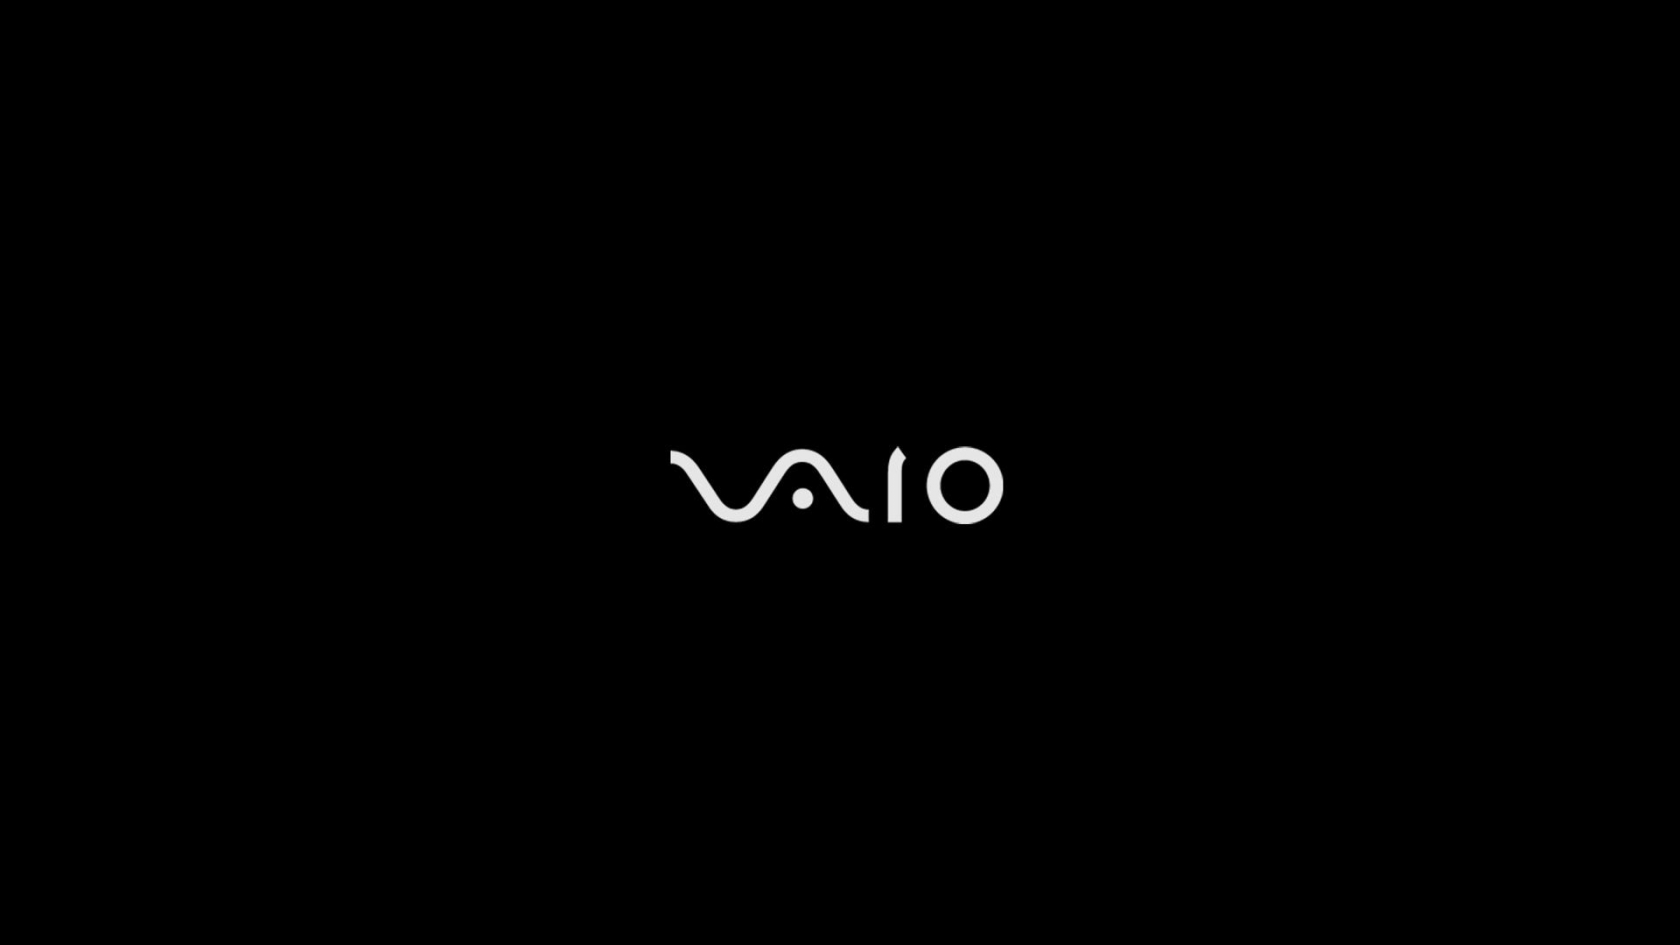 Vaio Black for 1680 x 945 HDTV resolution